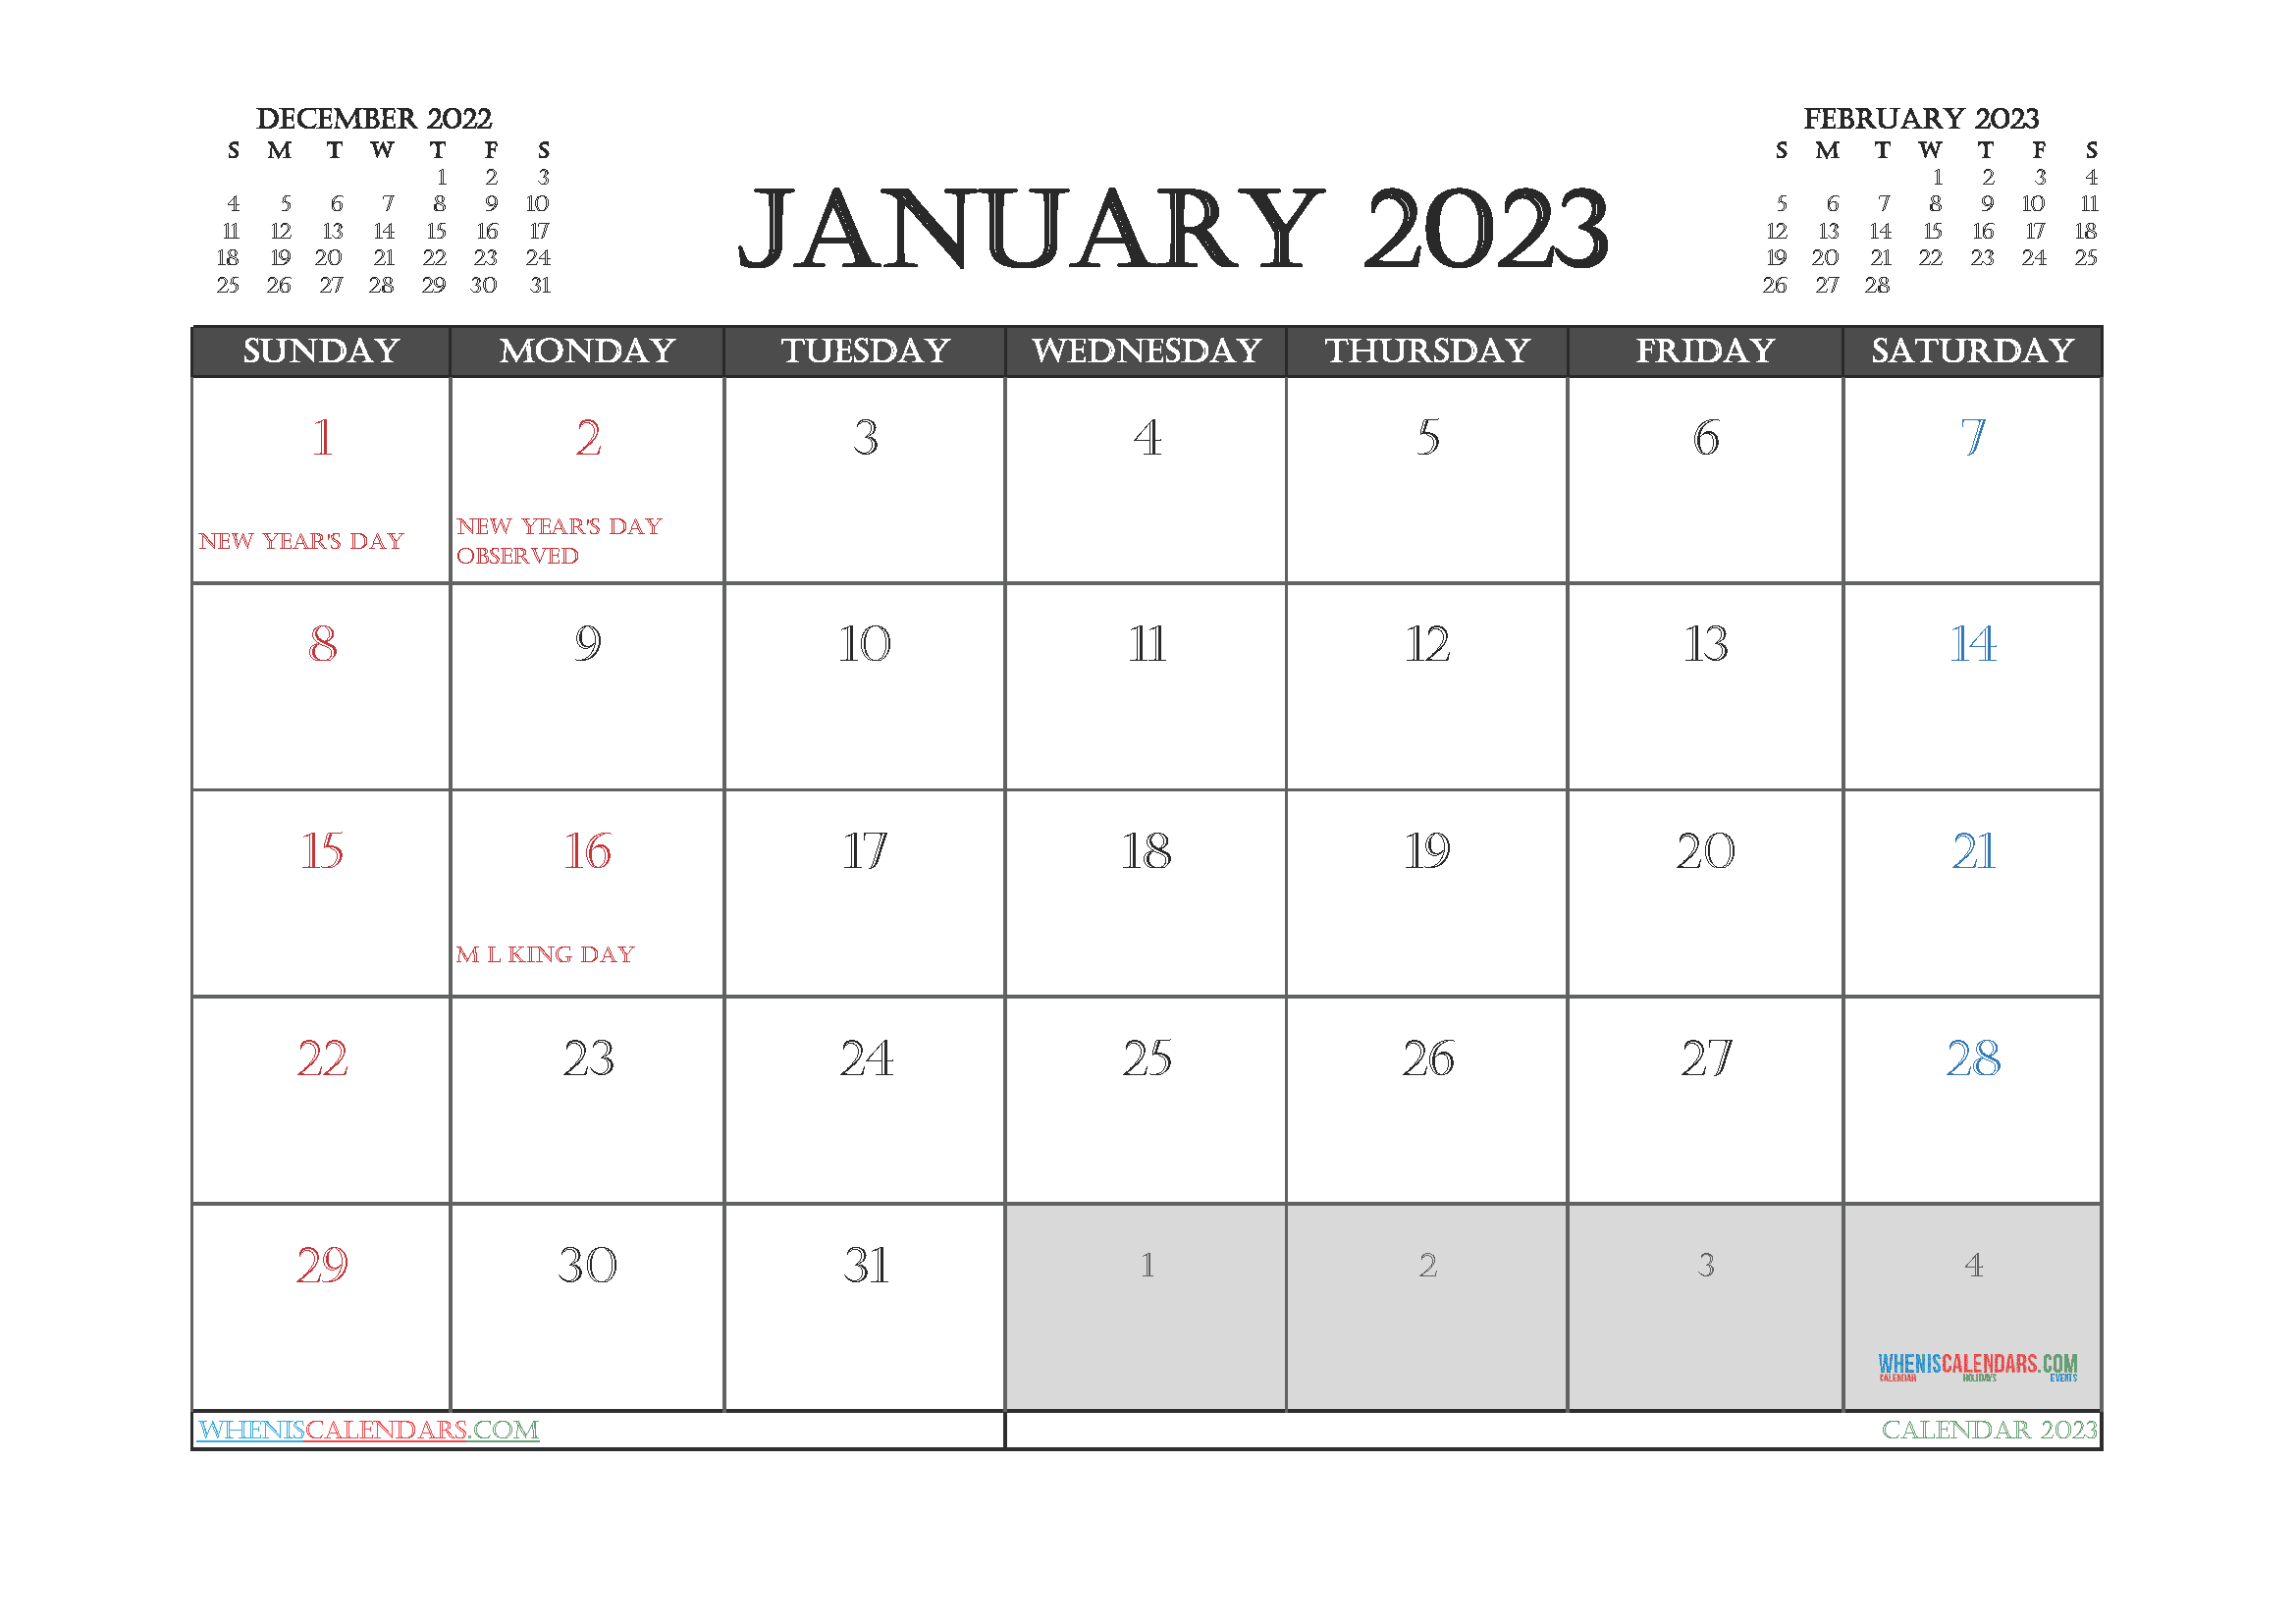 Free 2023 Calendar January Printable